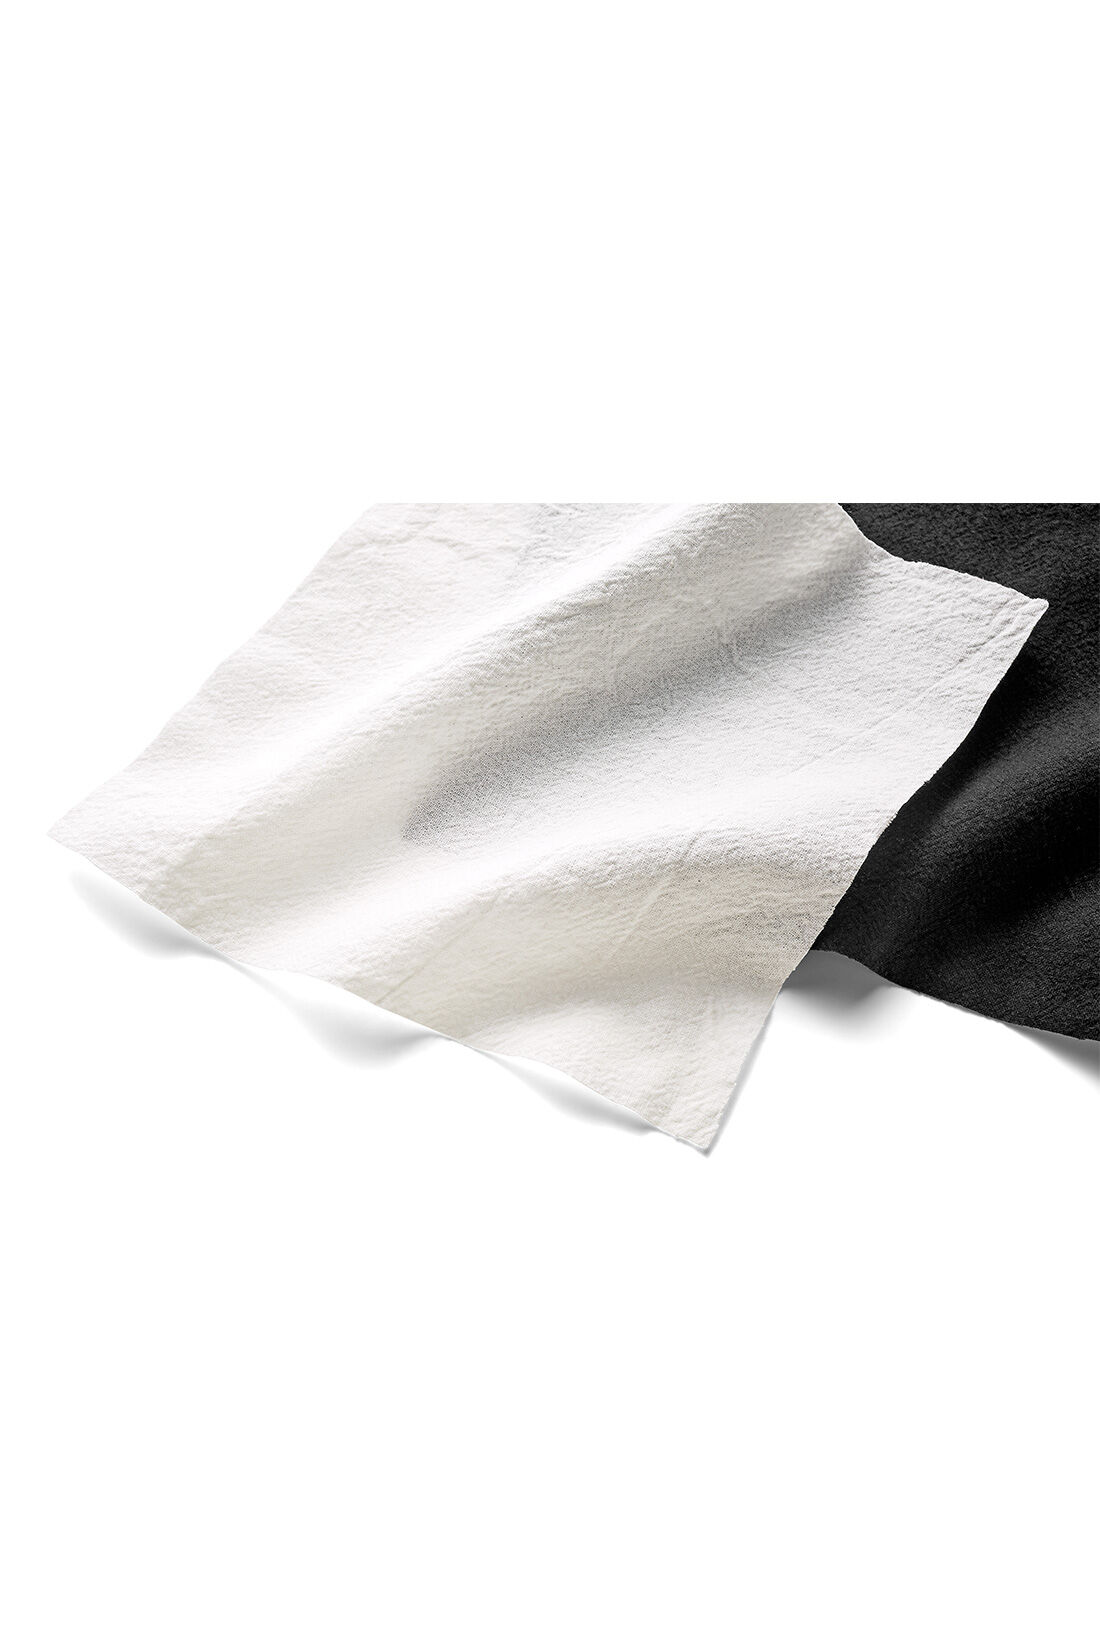 MEDE19F|MEDE19F　ハイネックワンピース〈ブラック〉|表面に独特のシボのあるコットン布はく素材。しっかりした肉感によるボリュームで、存在感があります。長い季節着られるのも魅力。